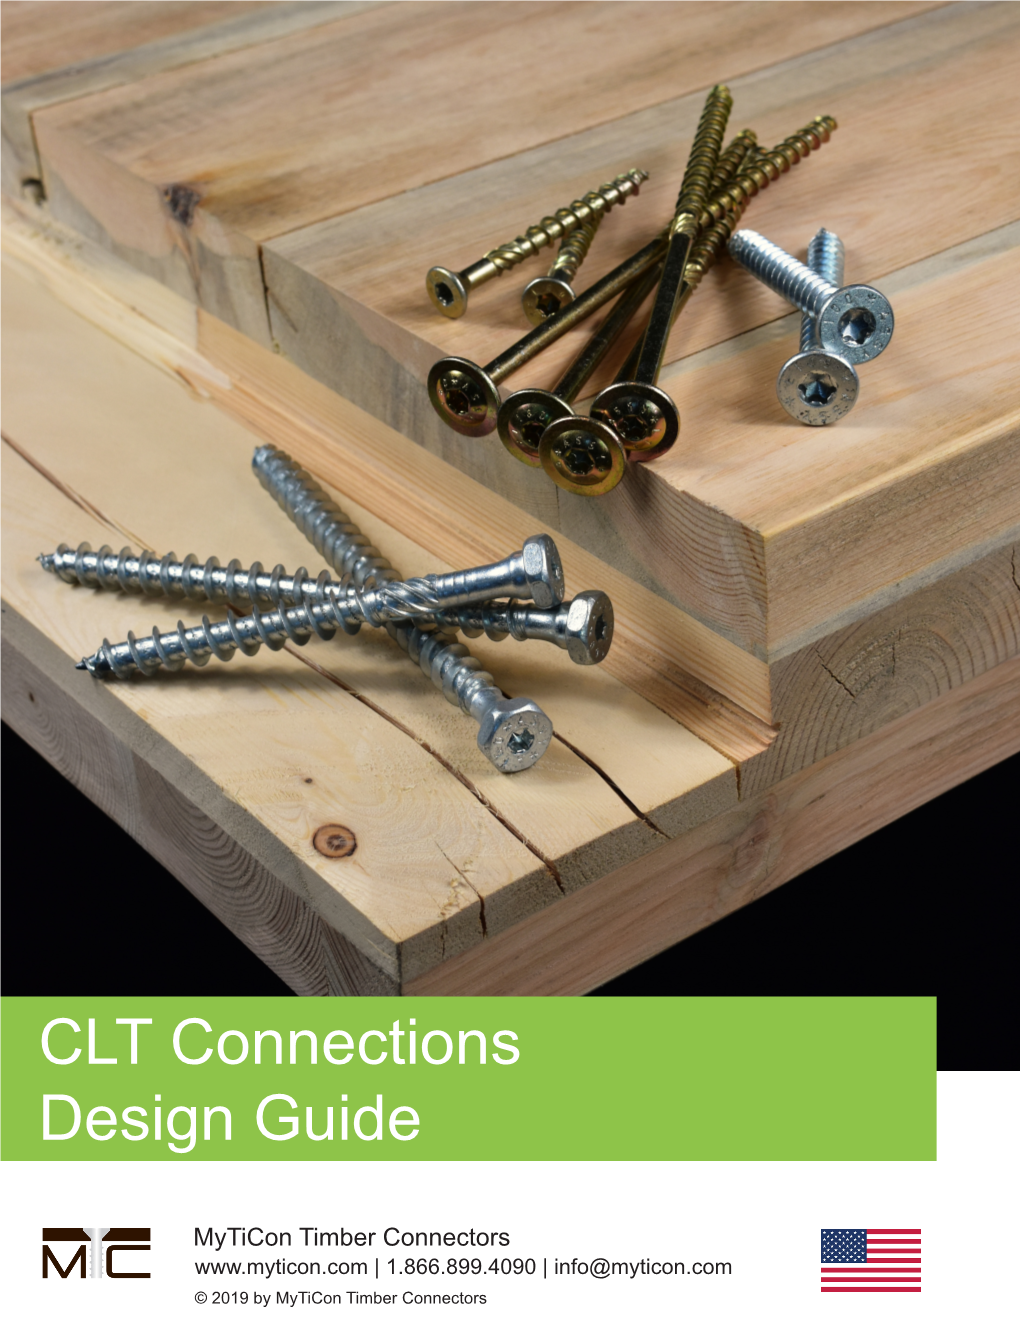 CLT Connections Design Guide